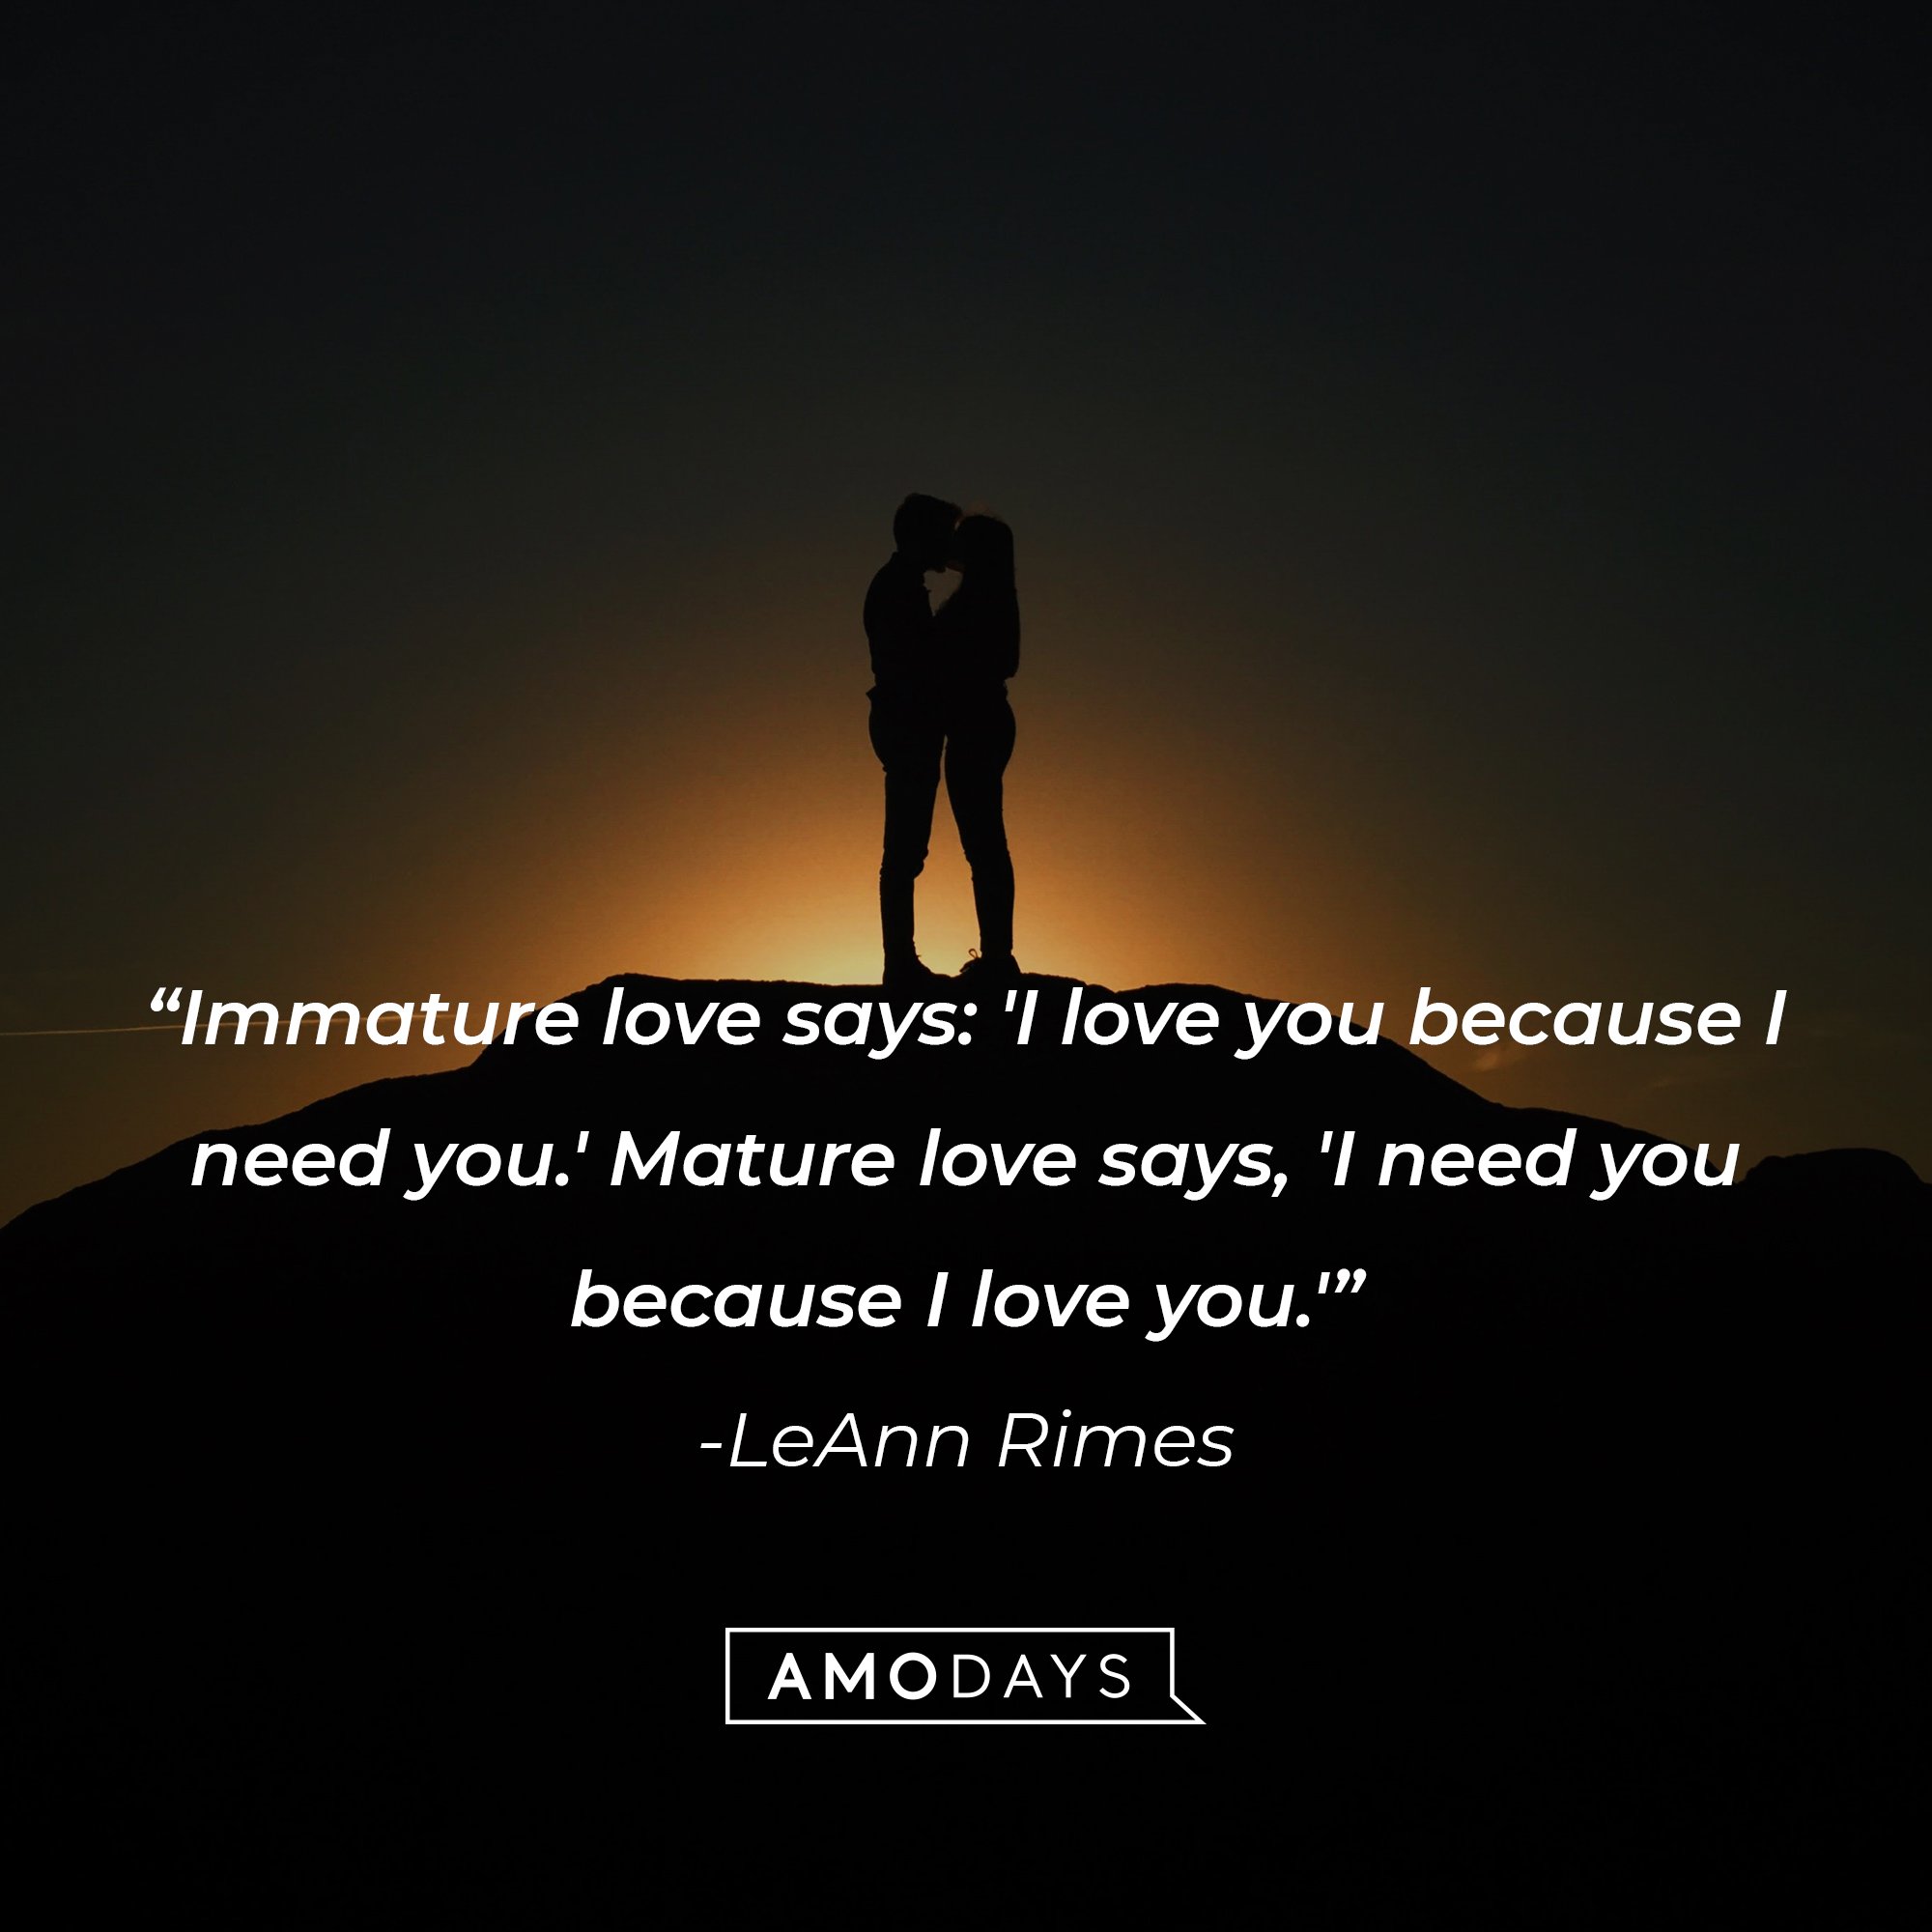 LeAnn Rimes’ quote: "Immature love says: 'I love you because I need you.' Mature love says, 'I need you because I love you.'" | Image: AmoDays